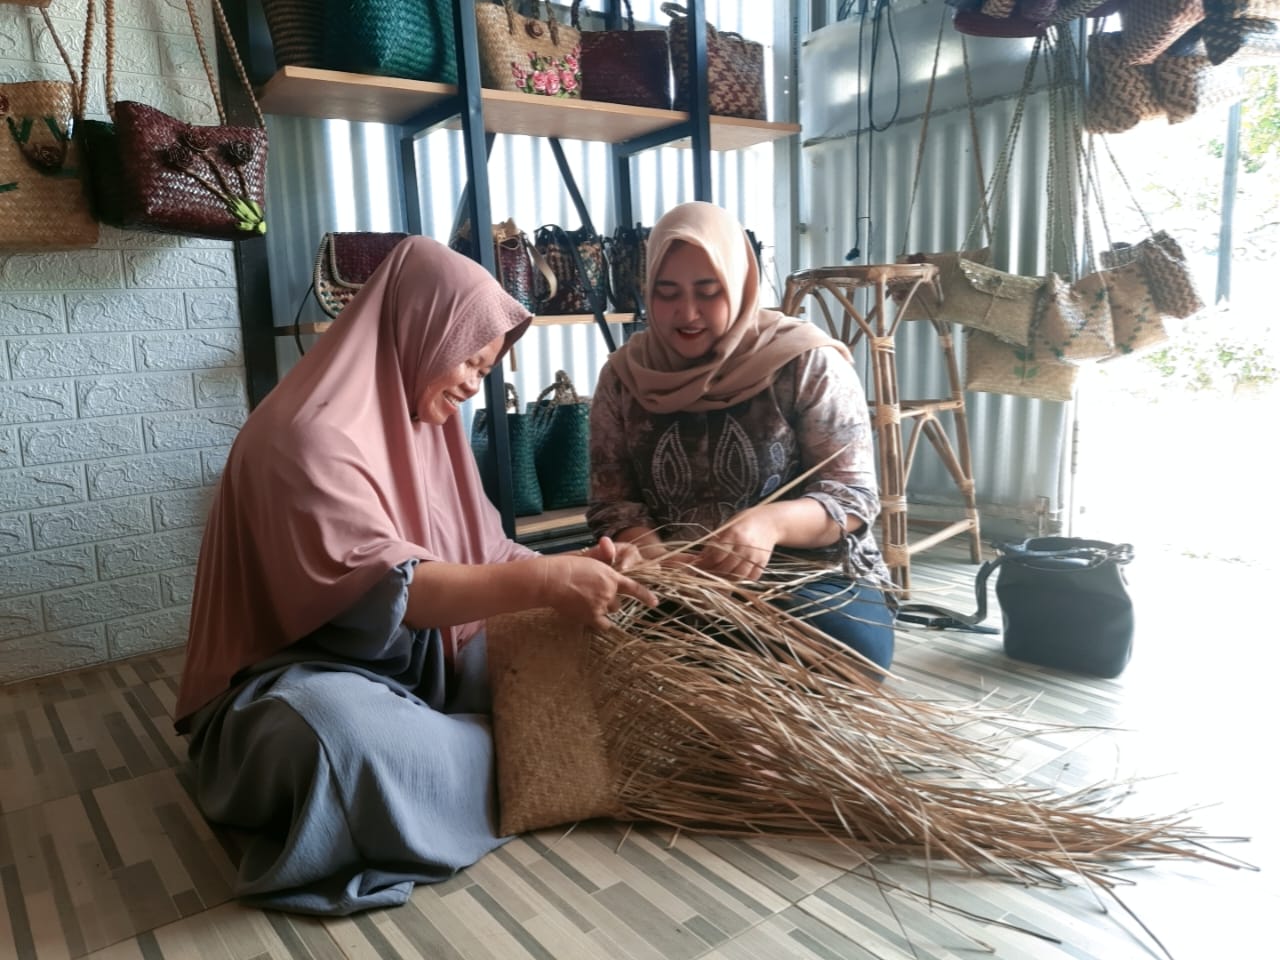 Menengok Cerita Mantri BRI di Banjar, Dari Aktor Inklusi Keuangan Hingga Kesejahteraan Keluarga Meningkat